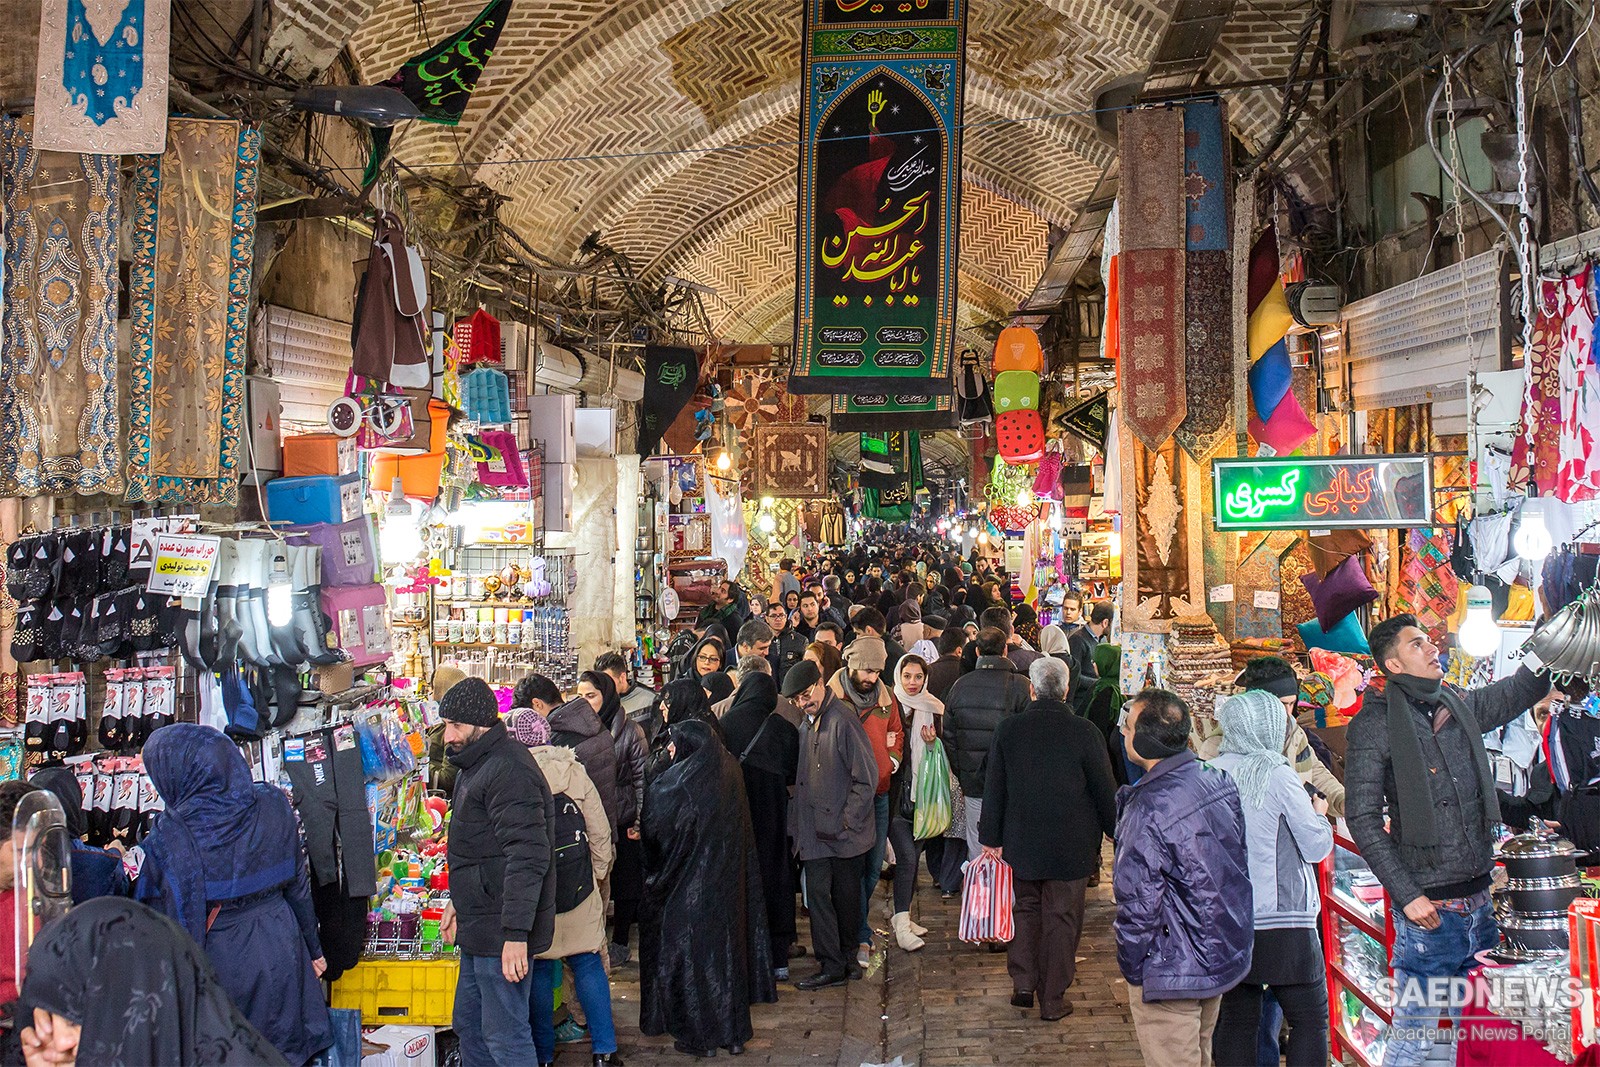 Islamic Marketplace: How Muslims Act in Bazaar?